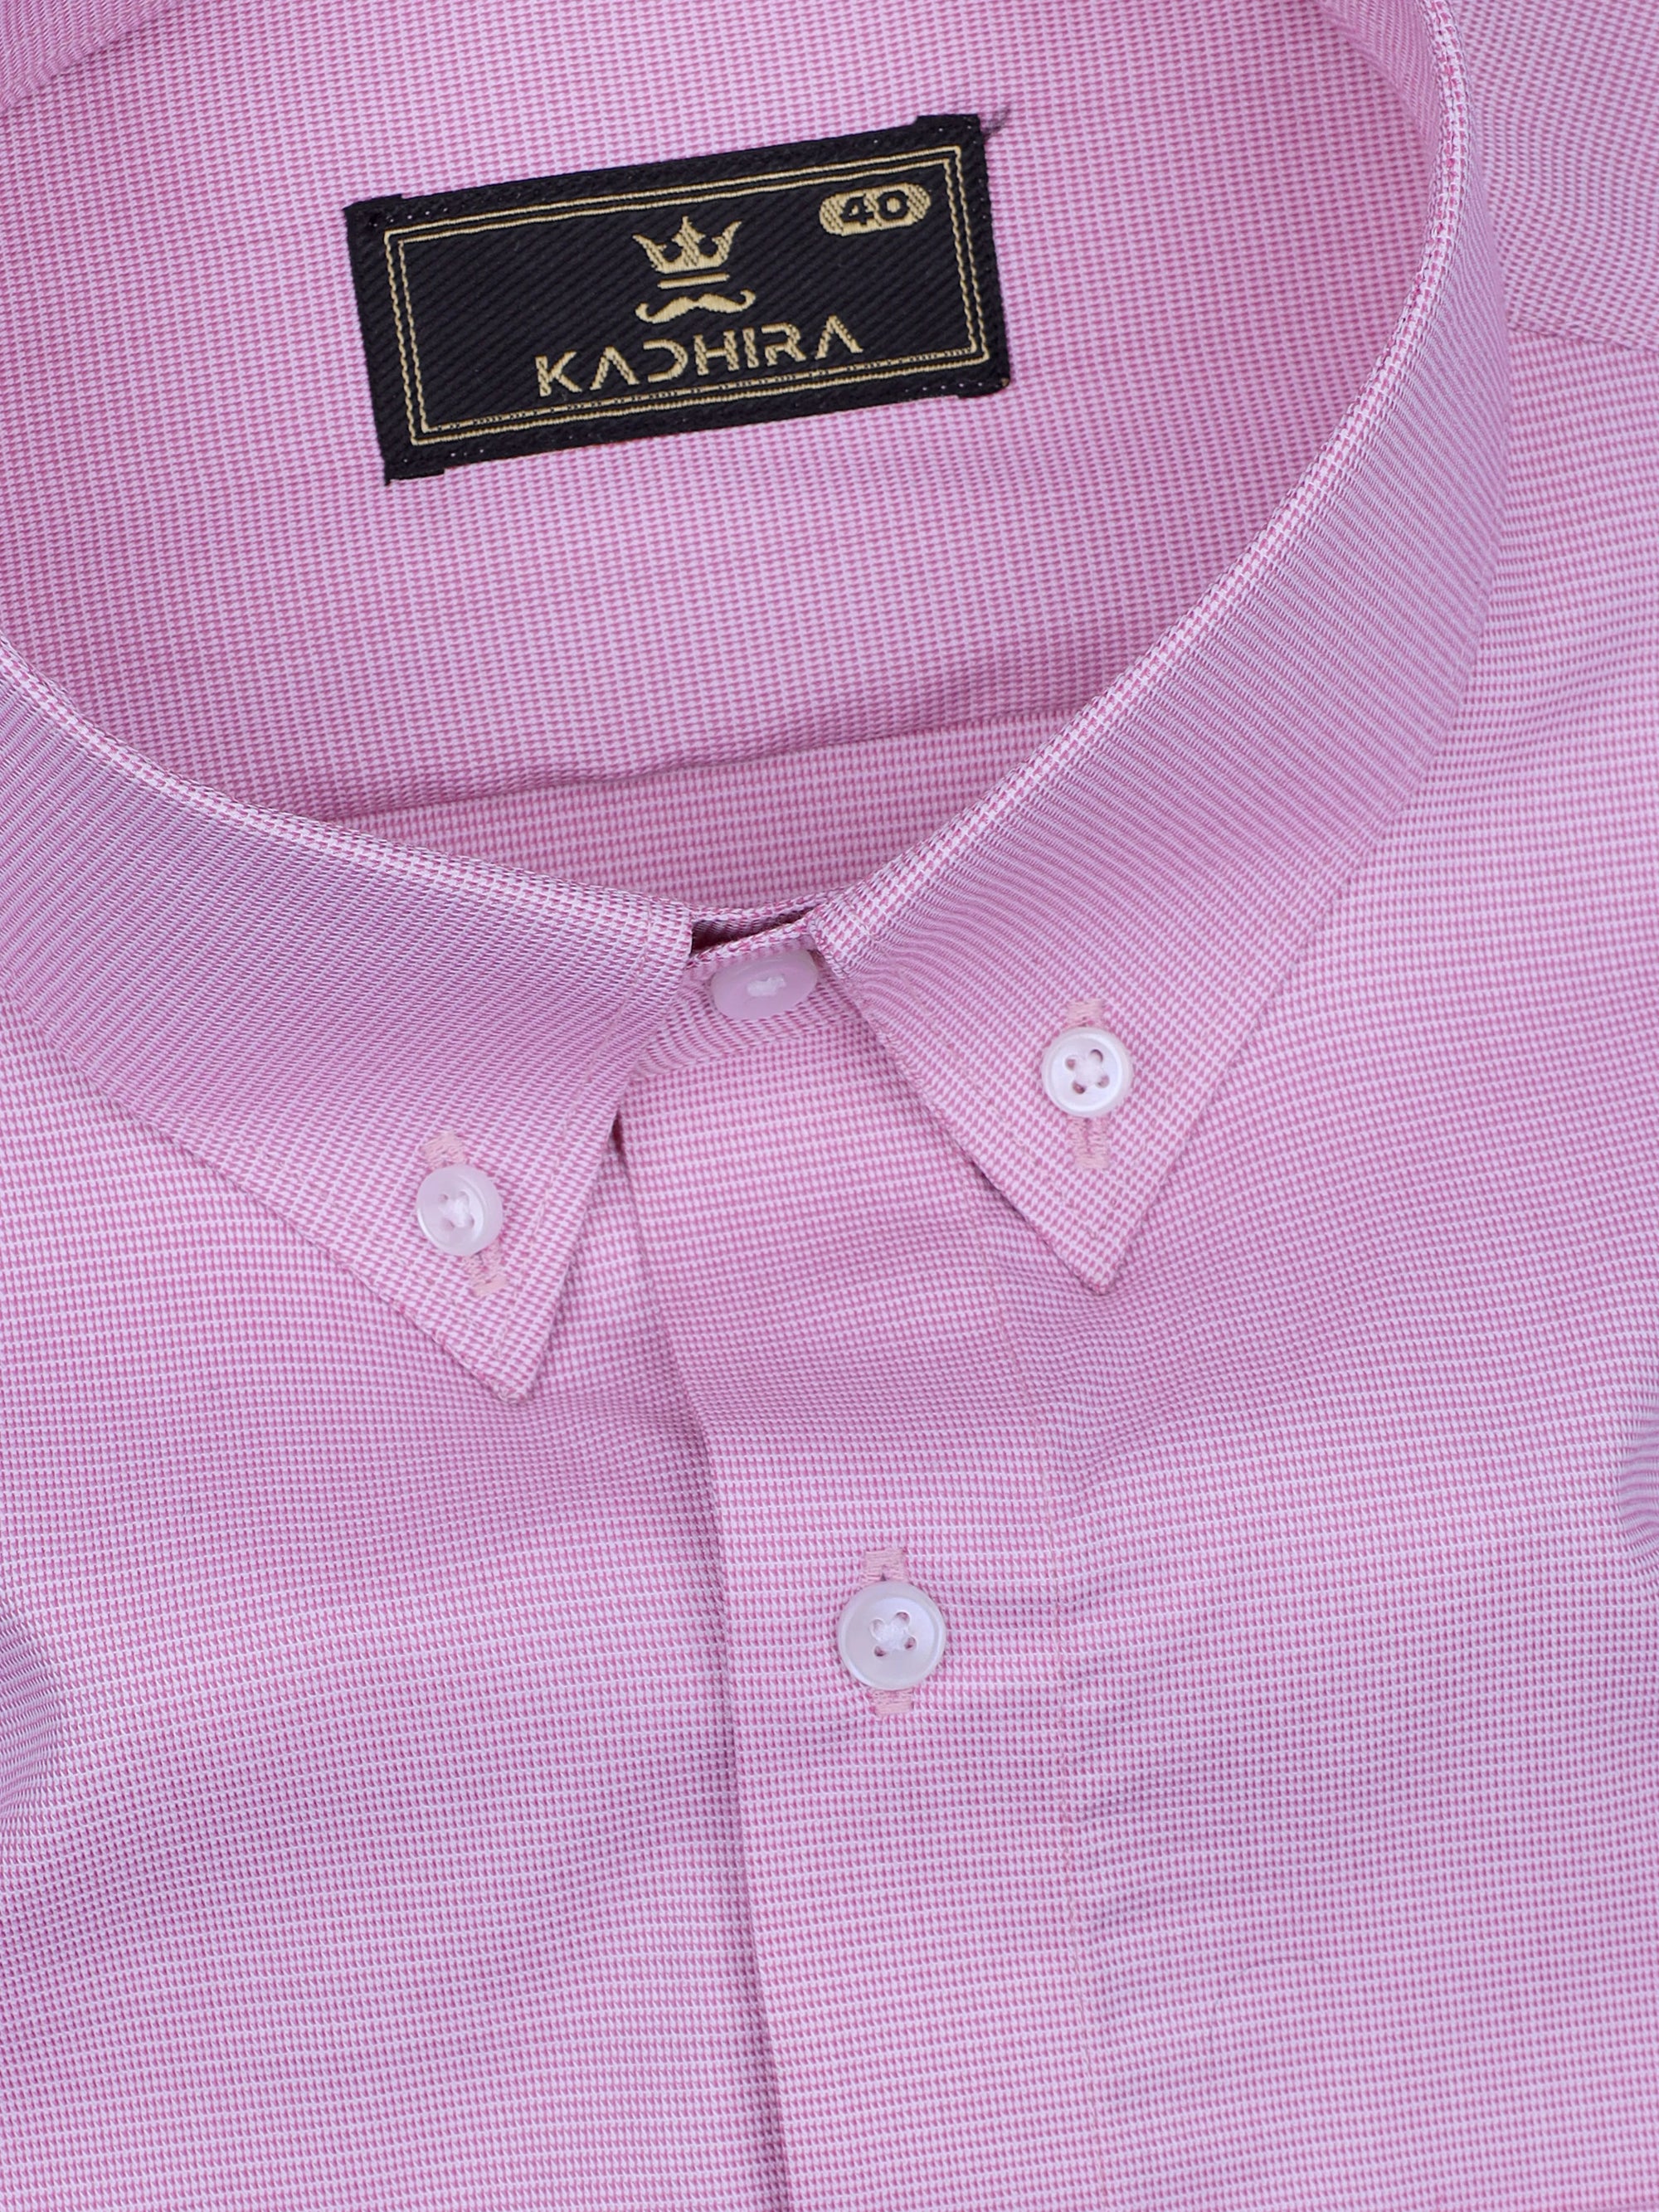 Reddish Magenta  Button Down Premium Giza Cotton Shirt